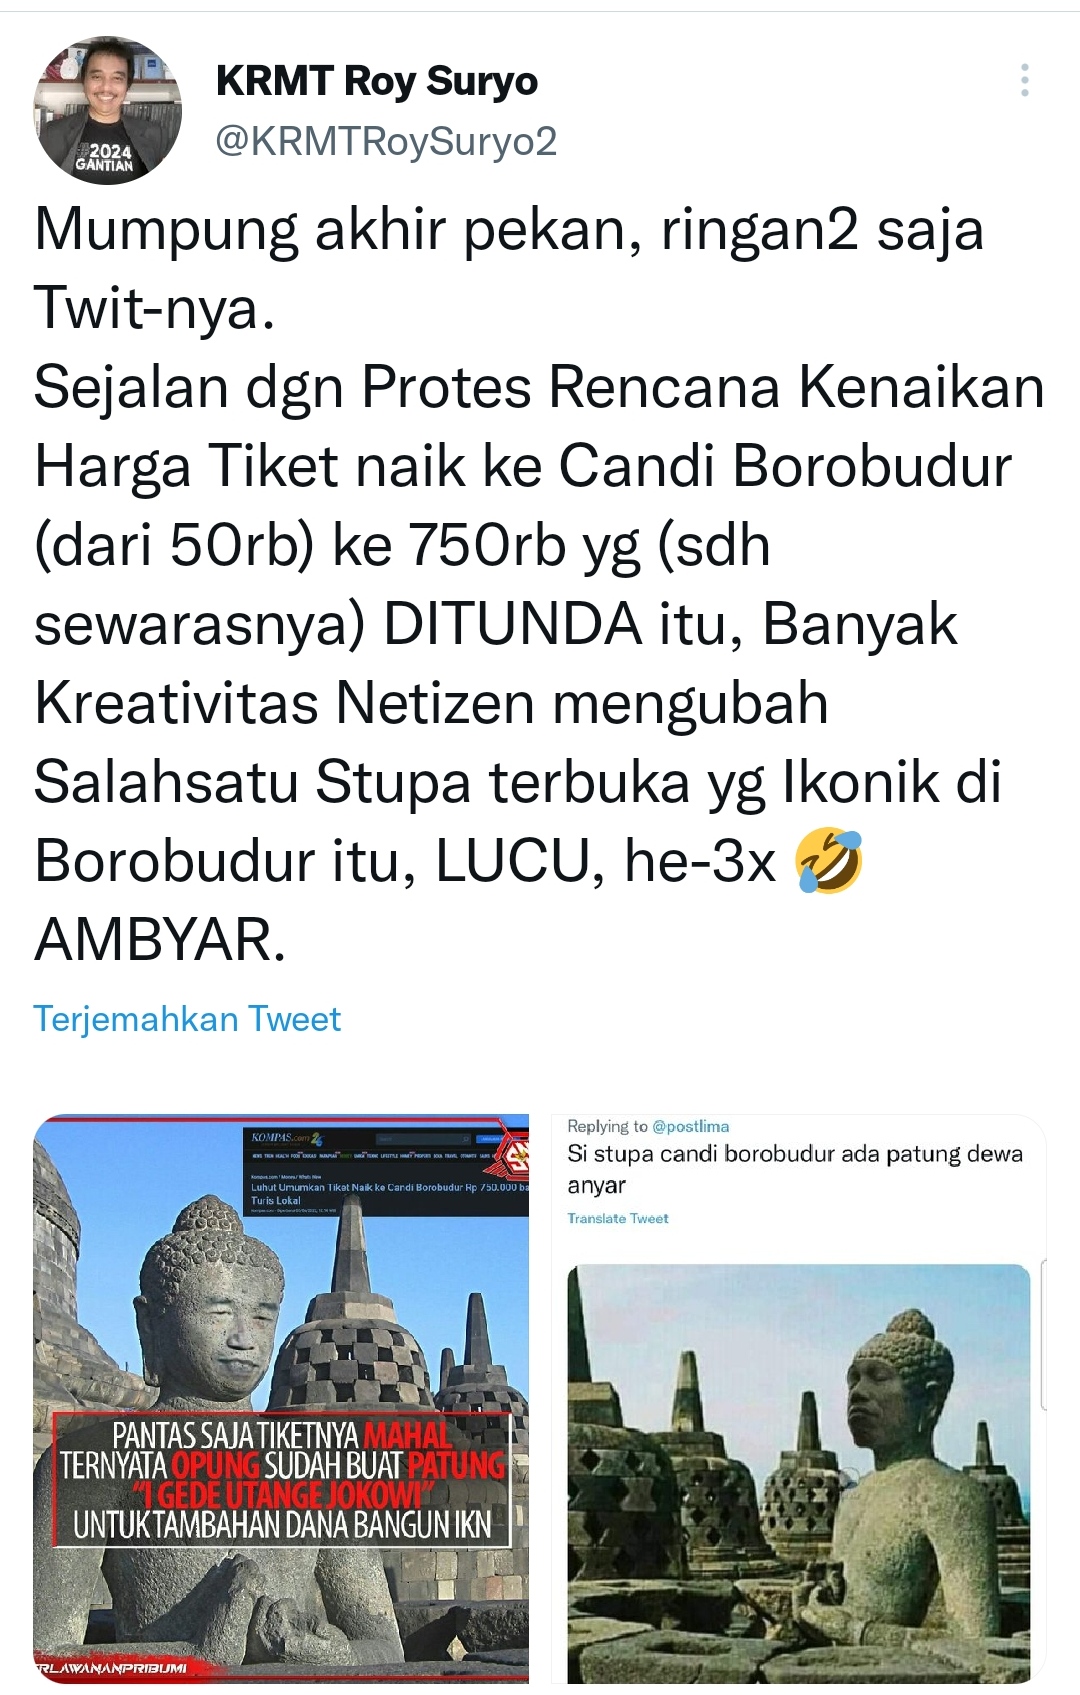 Foto Stupa Borobudur Mirip Jokowi yang Diunggah Roy Suryo Berbuntut Panjang, Polisi Turun Tangan